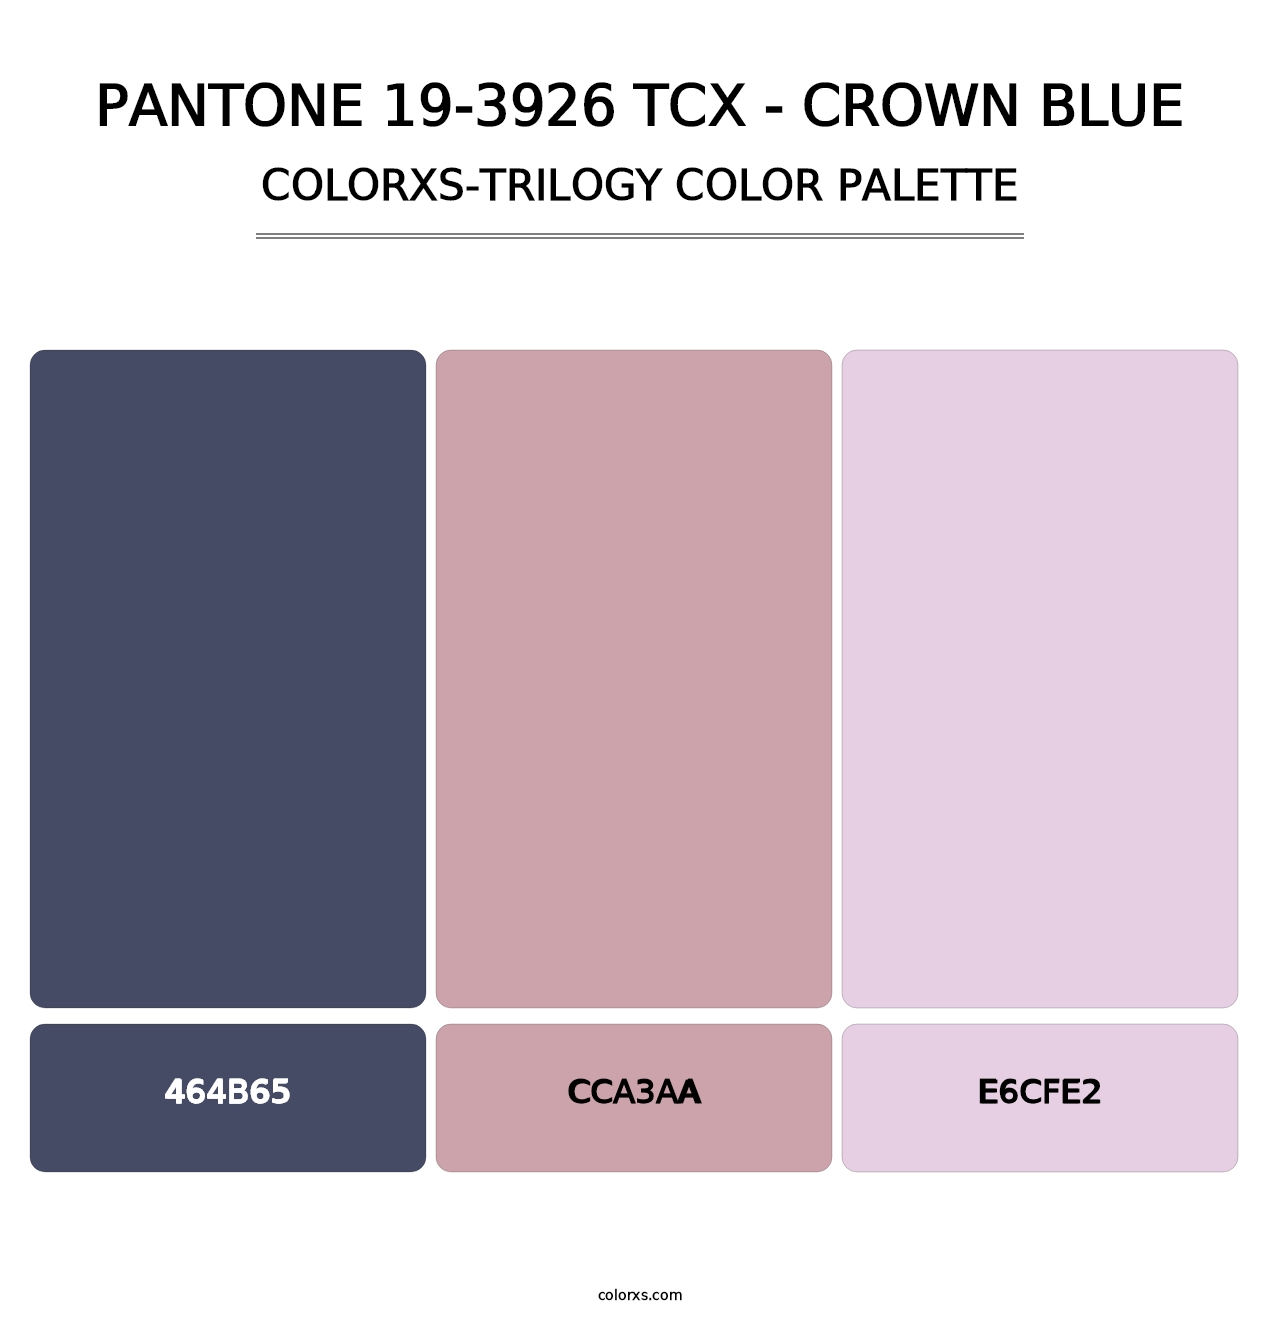 PANTONE 19-3926 TCX - Crown Blue - Colorxs Trilogy Palette